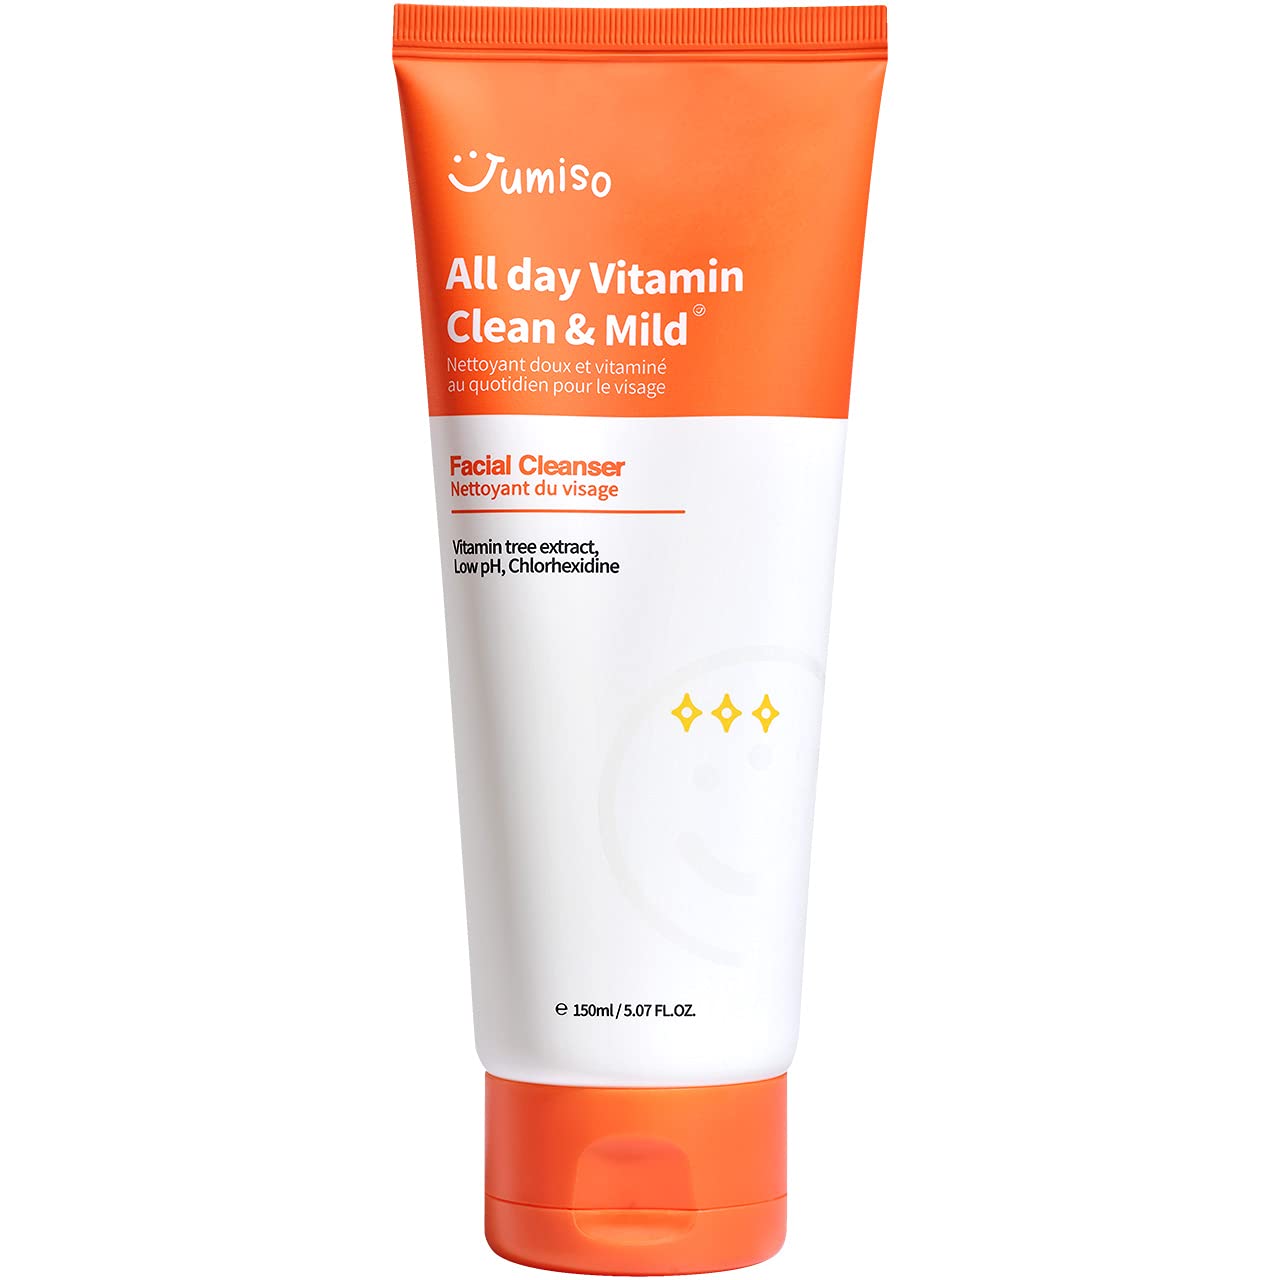 Jumiso All Day Vitamin Clean & Mild Facial Cleanser 150 ml